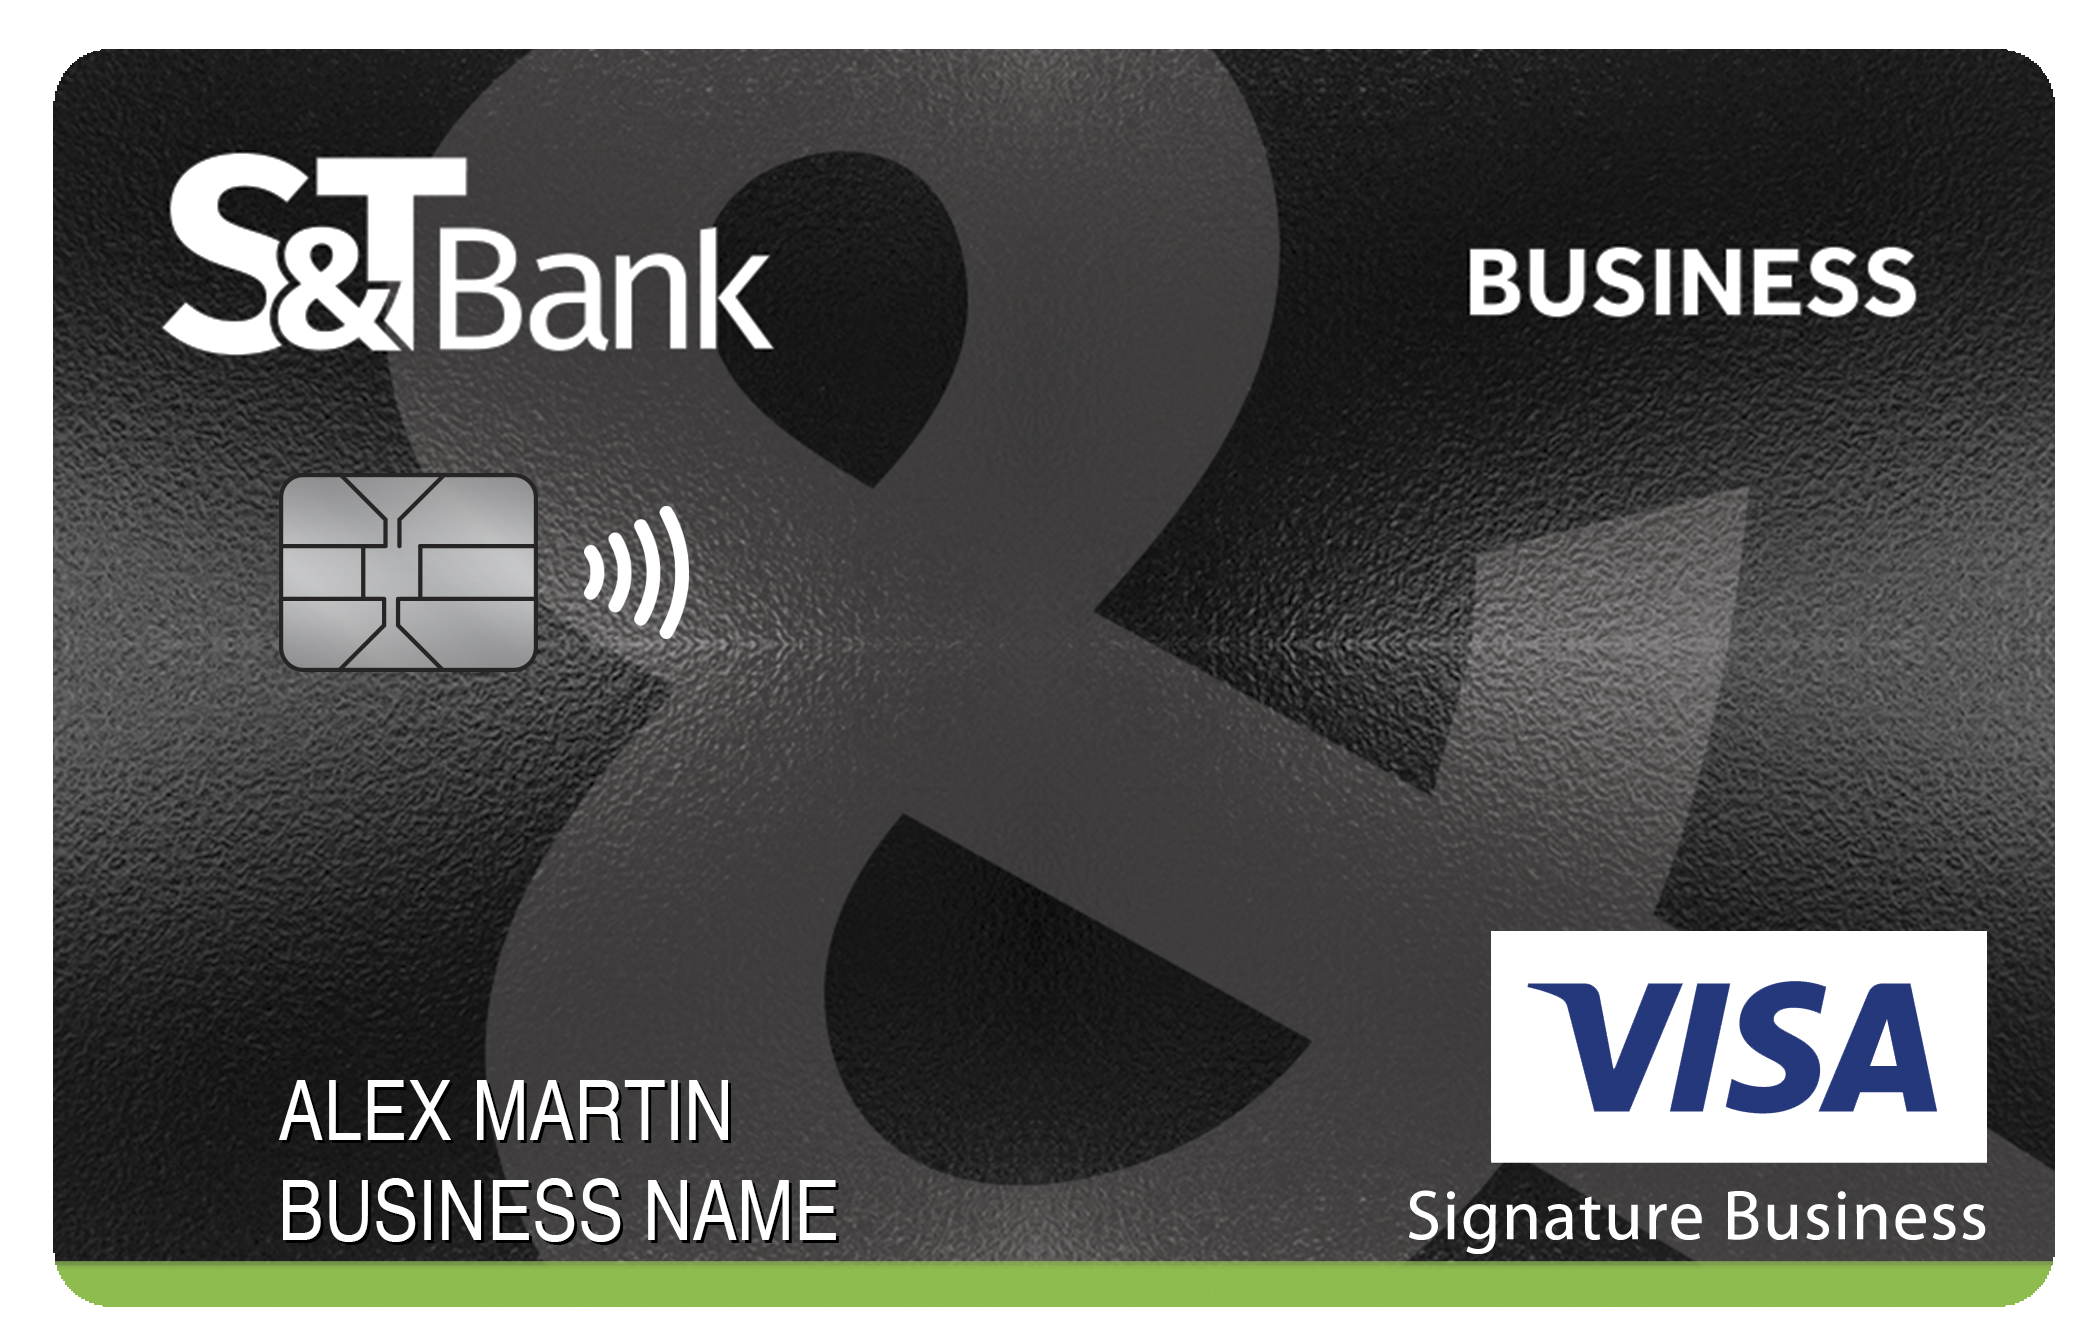 S&T Bank Smart Business Rewards Card